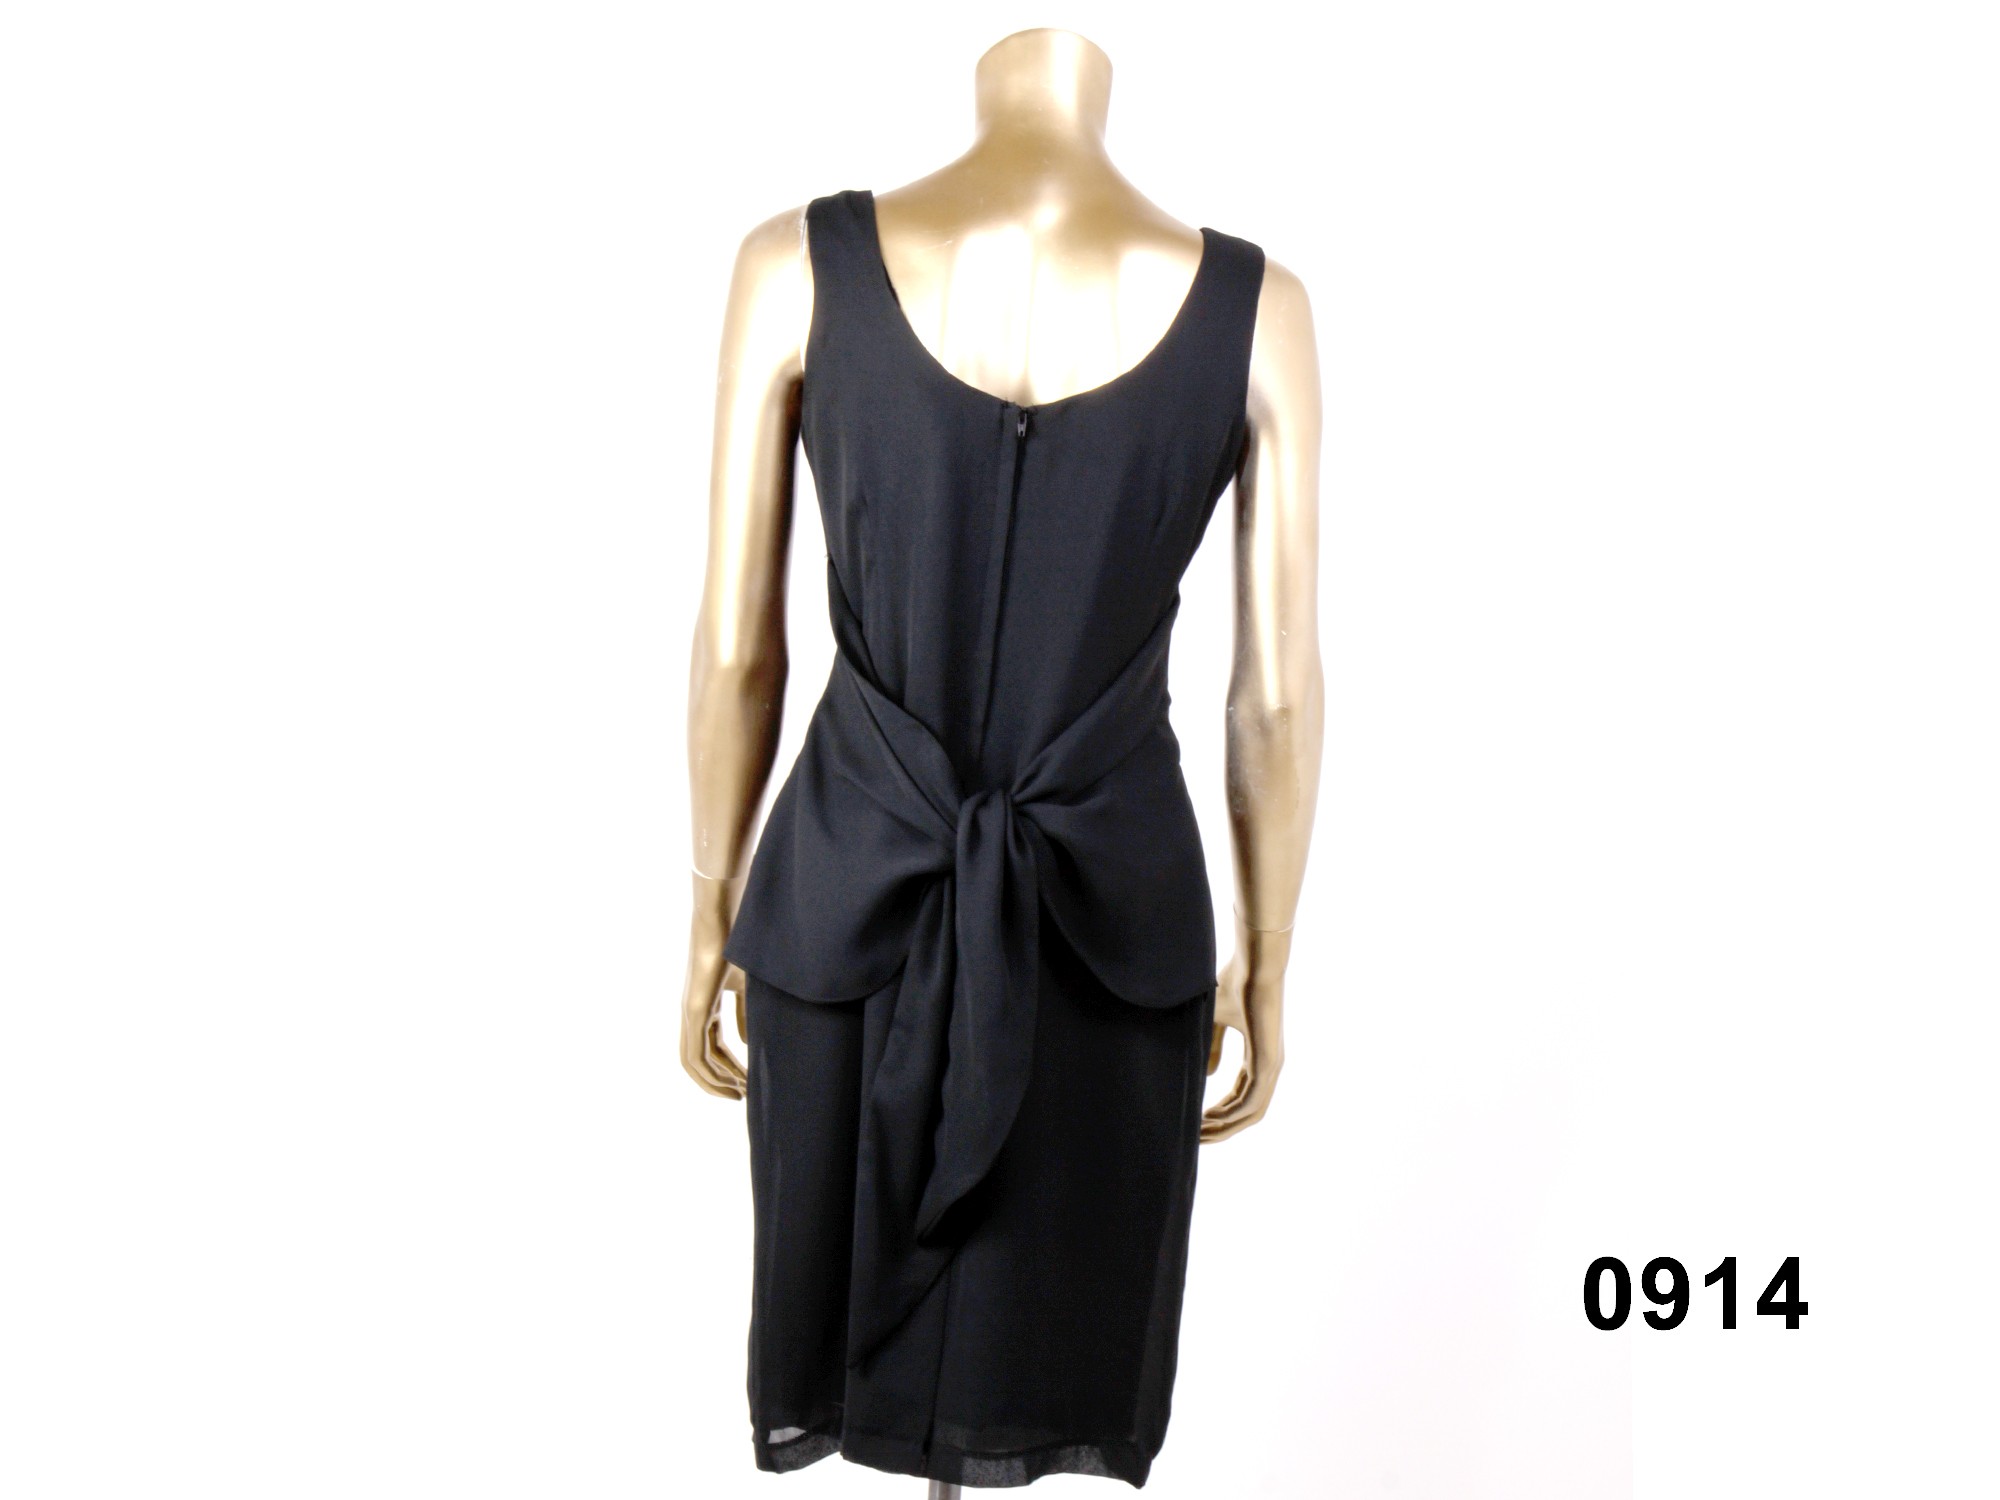 Shop Black Evening Dress online - Antiques of Kingston